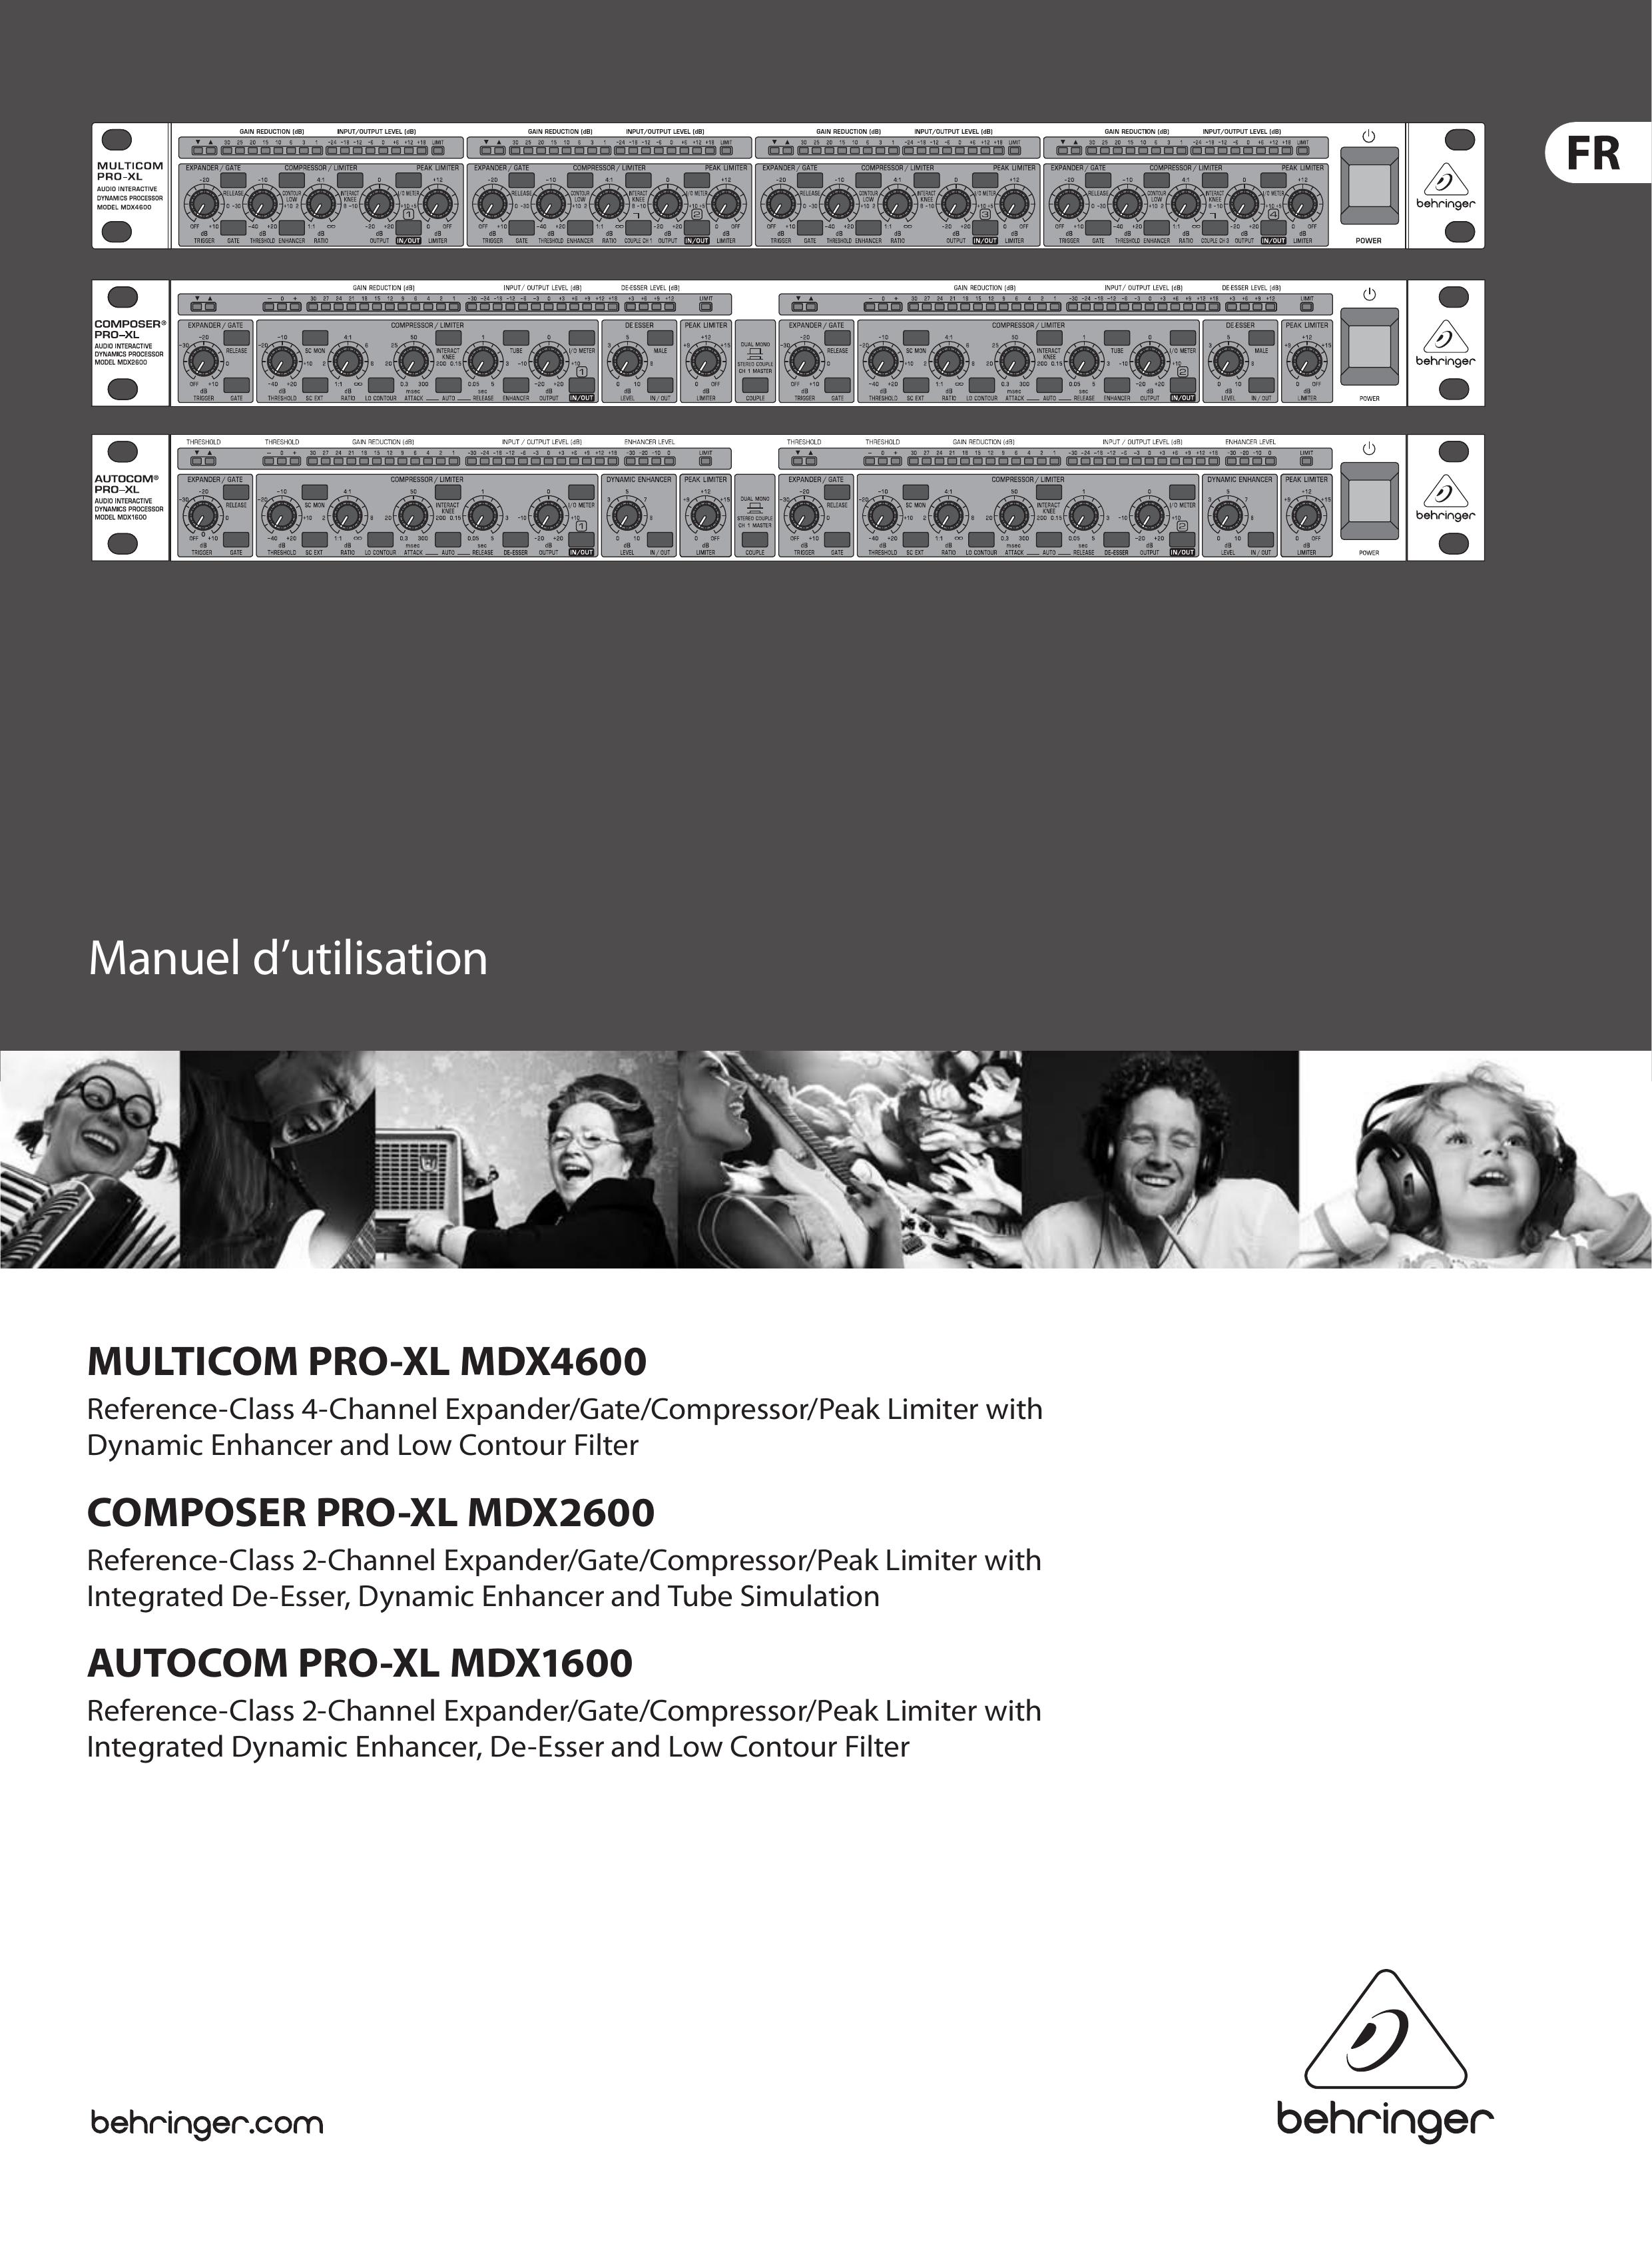 Behringer COMPOSER PRO-XL MDX2600 Music Mixer User Manual